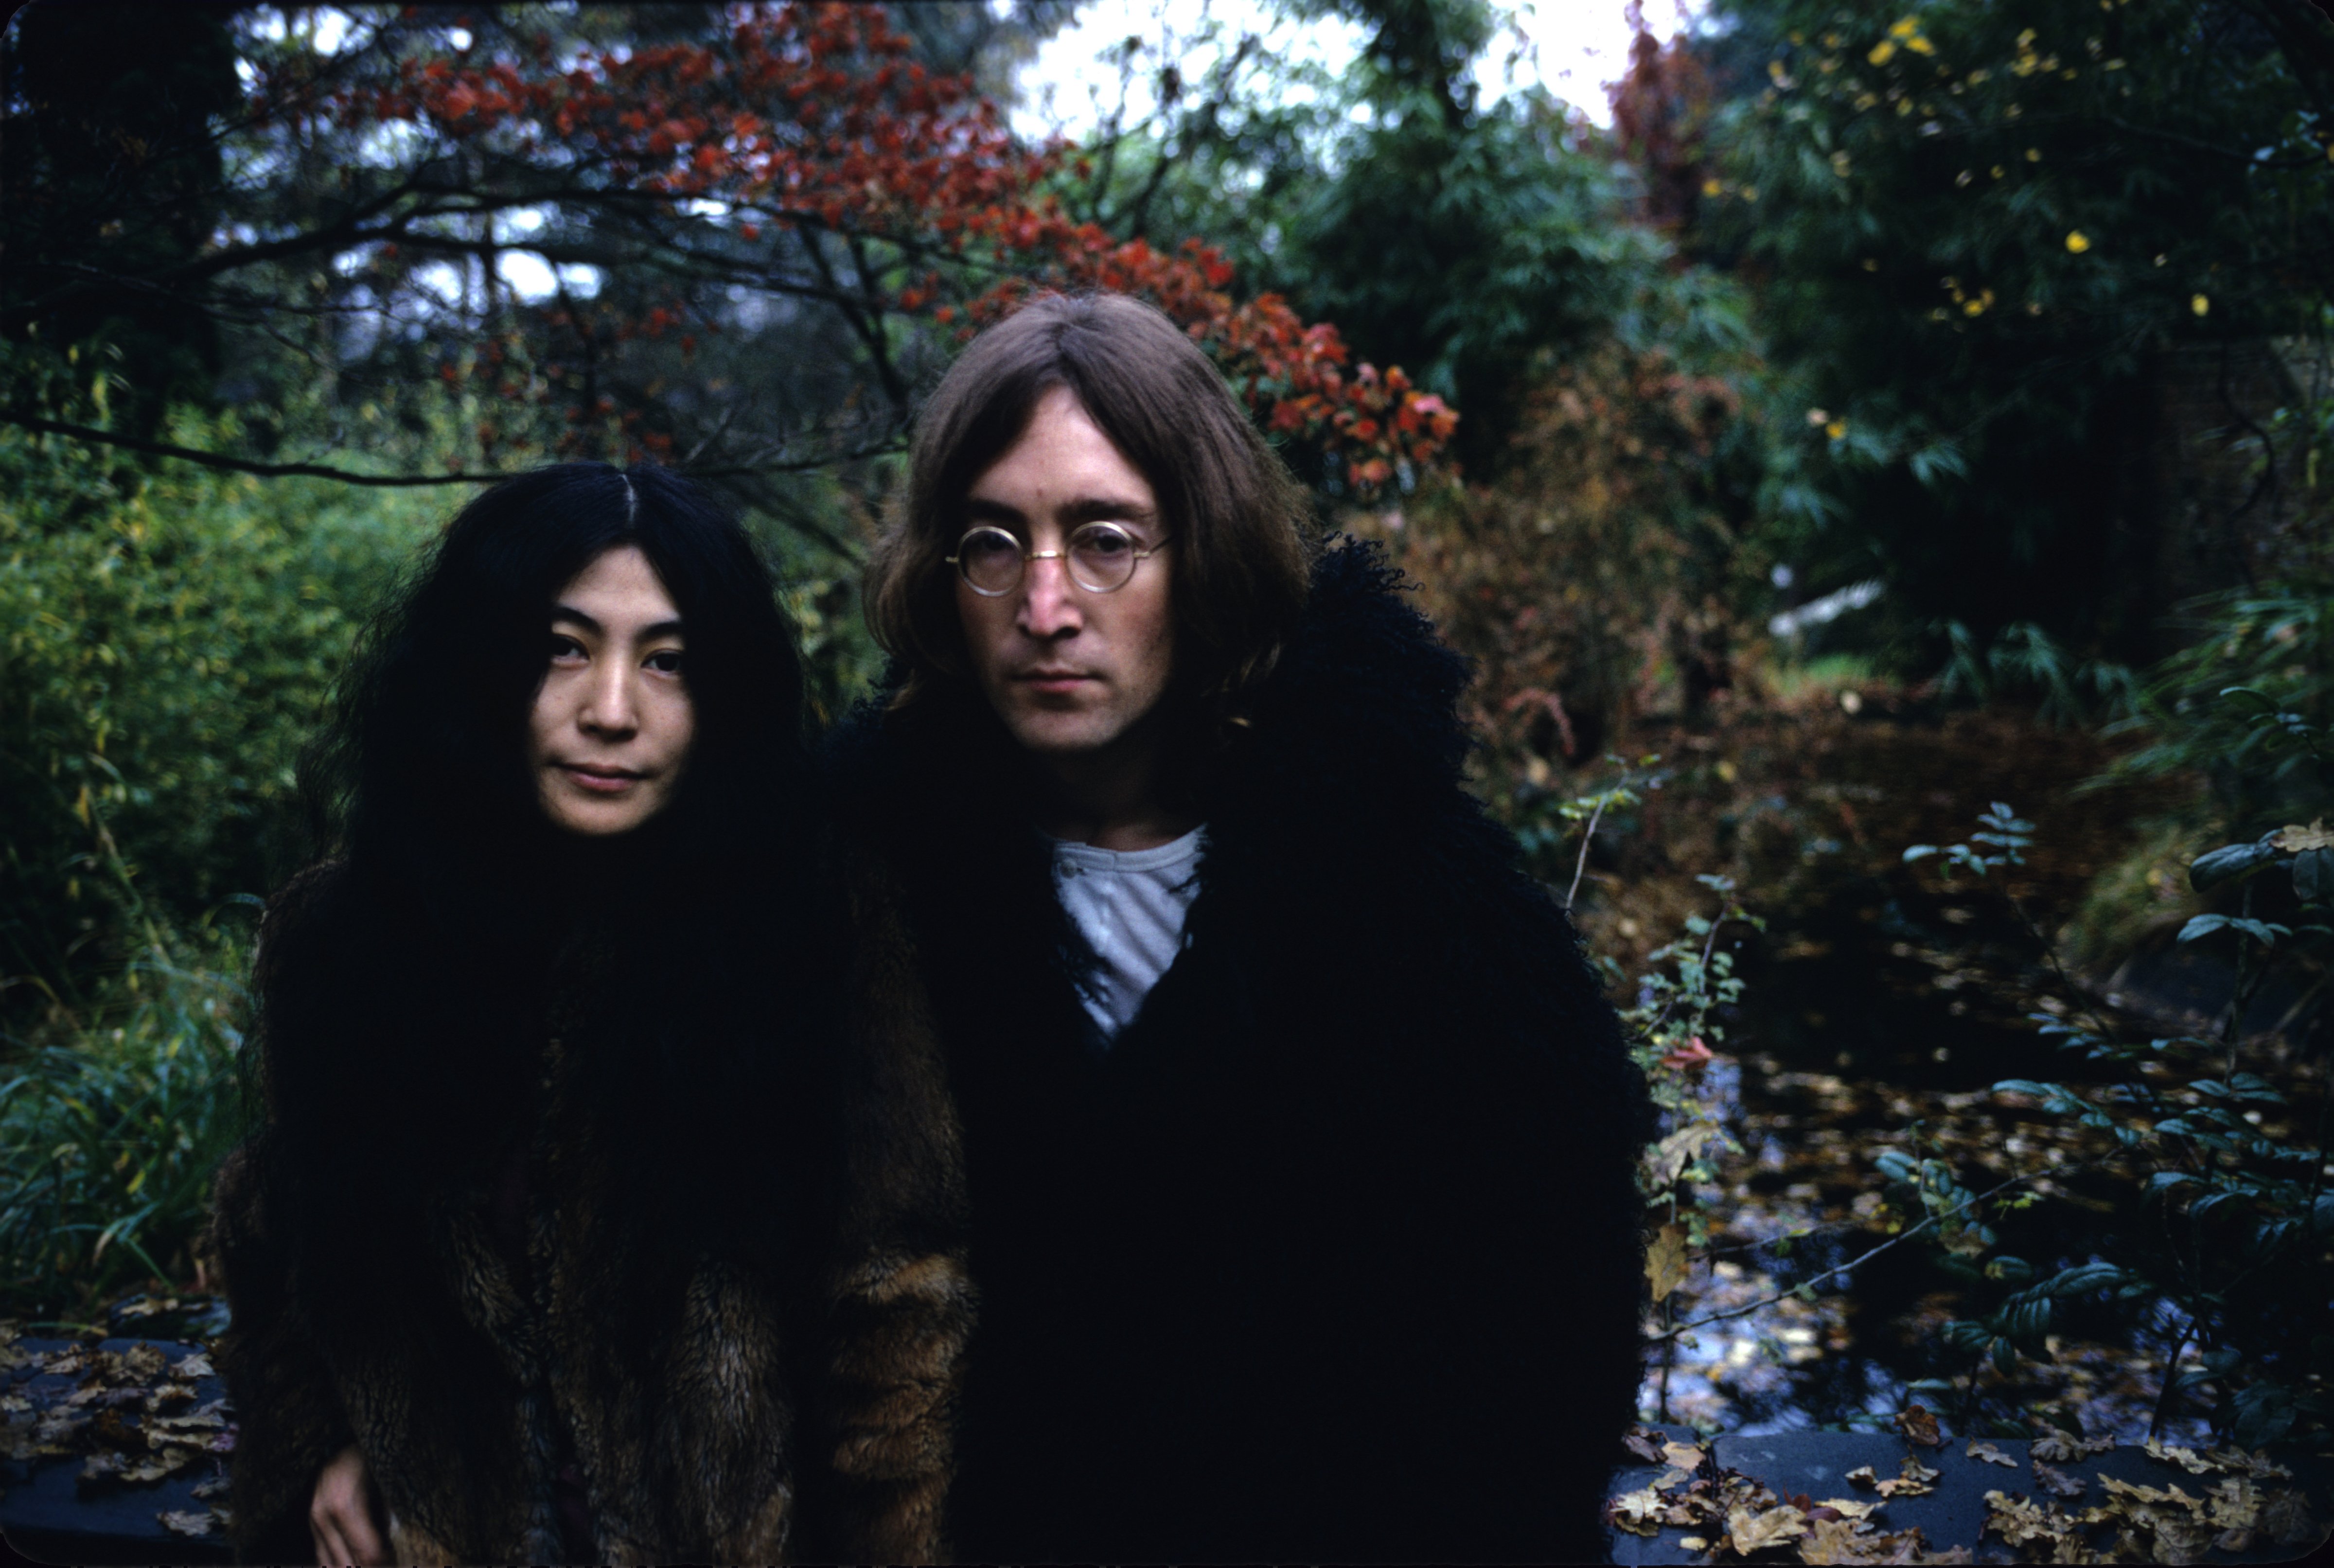 Portrait of Japanese-born artist and musician Yoko Ono and British musican and artist John Lennon